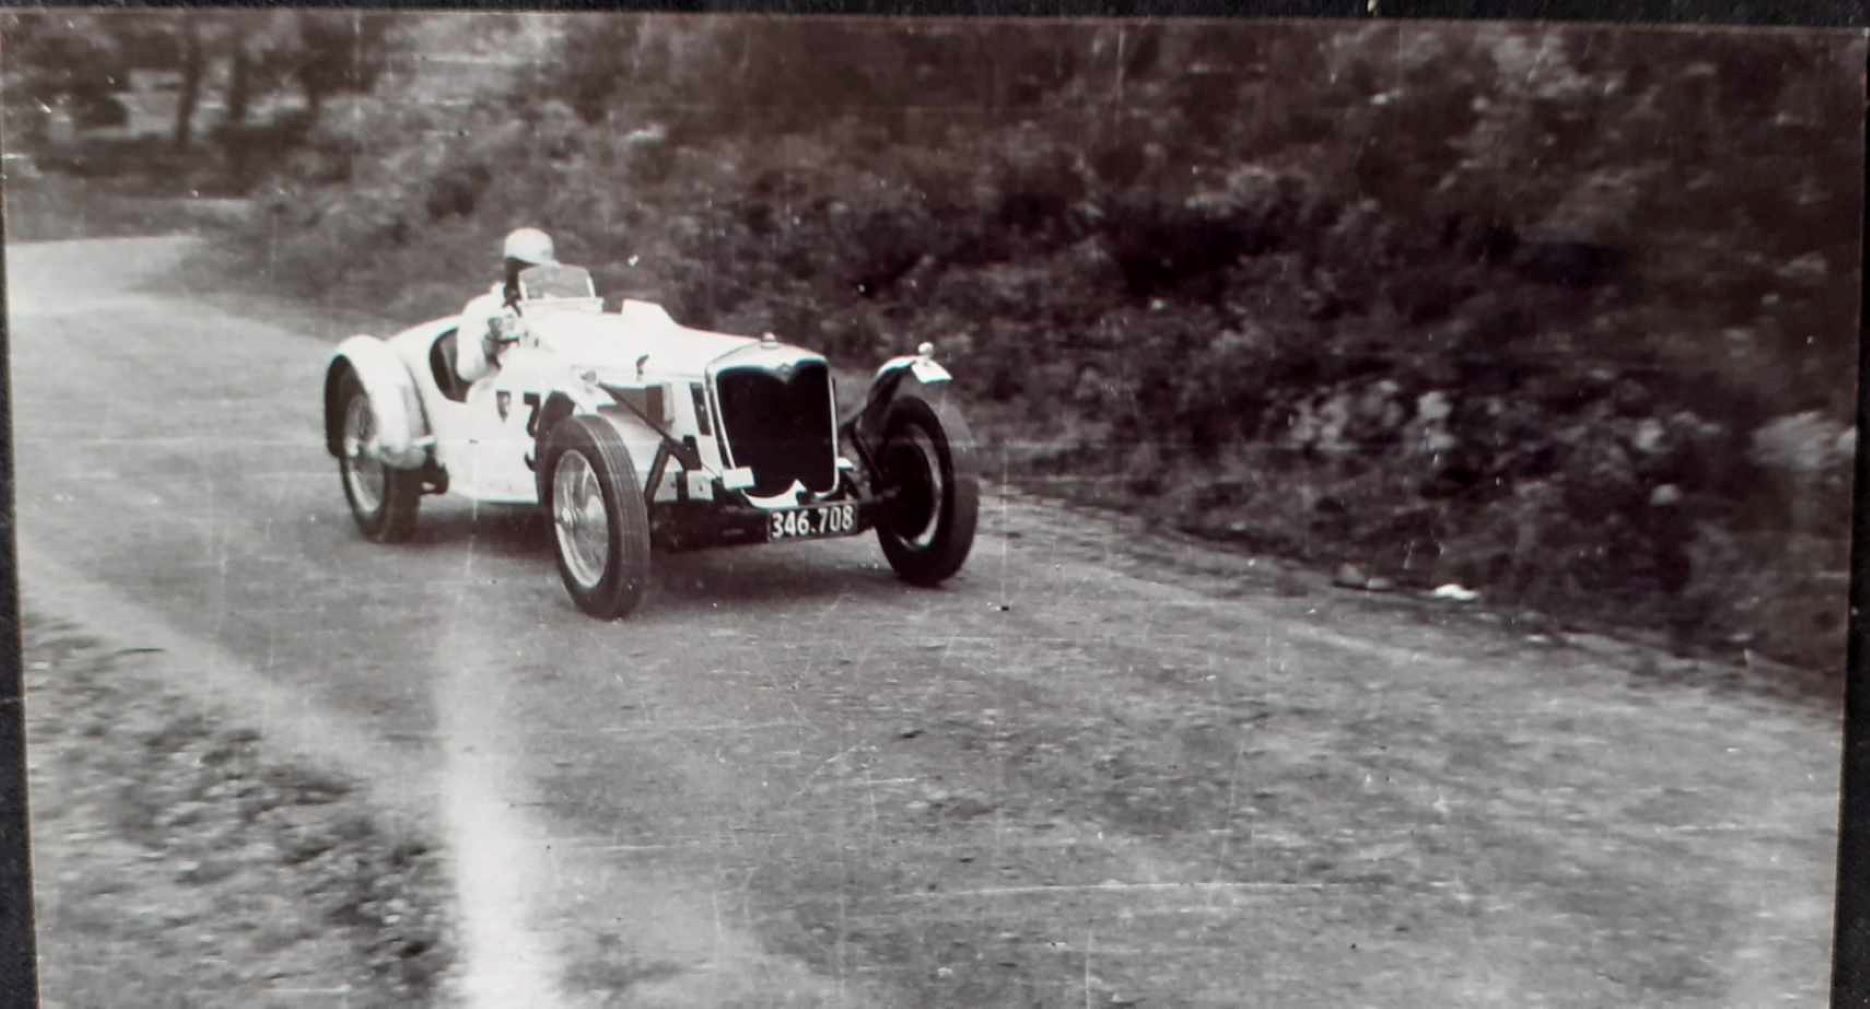 Name:  NSCC 1950 #0122 Riley Race #3 Q at Hill Climb - 346.708 1951 -56 plate 1950's - image Graeme Wel.jpg
Views: 166
Size:  178.4 KB